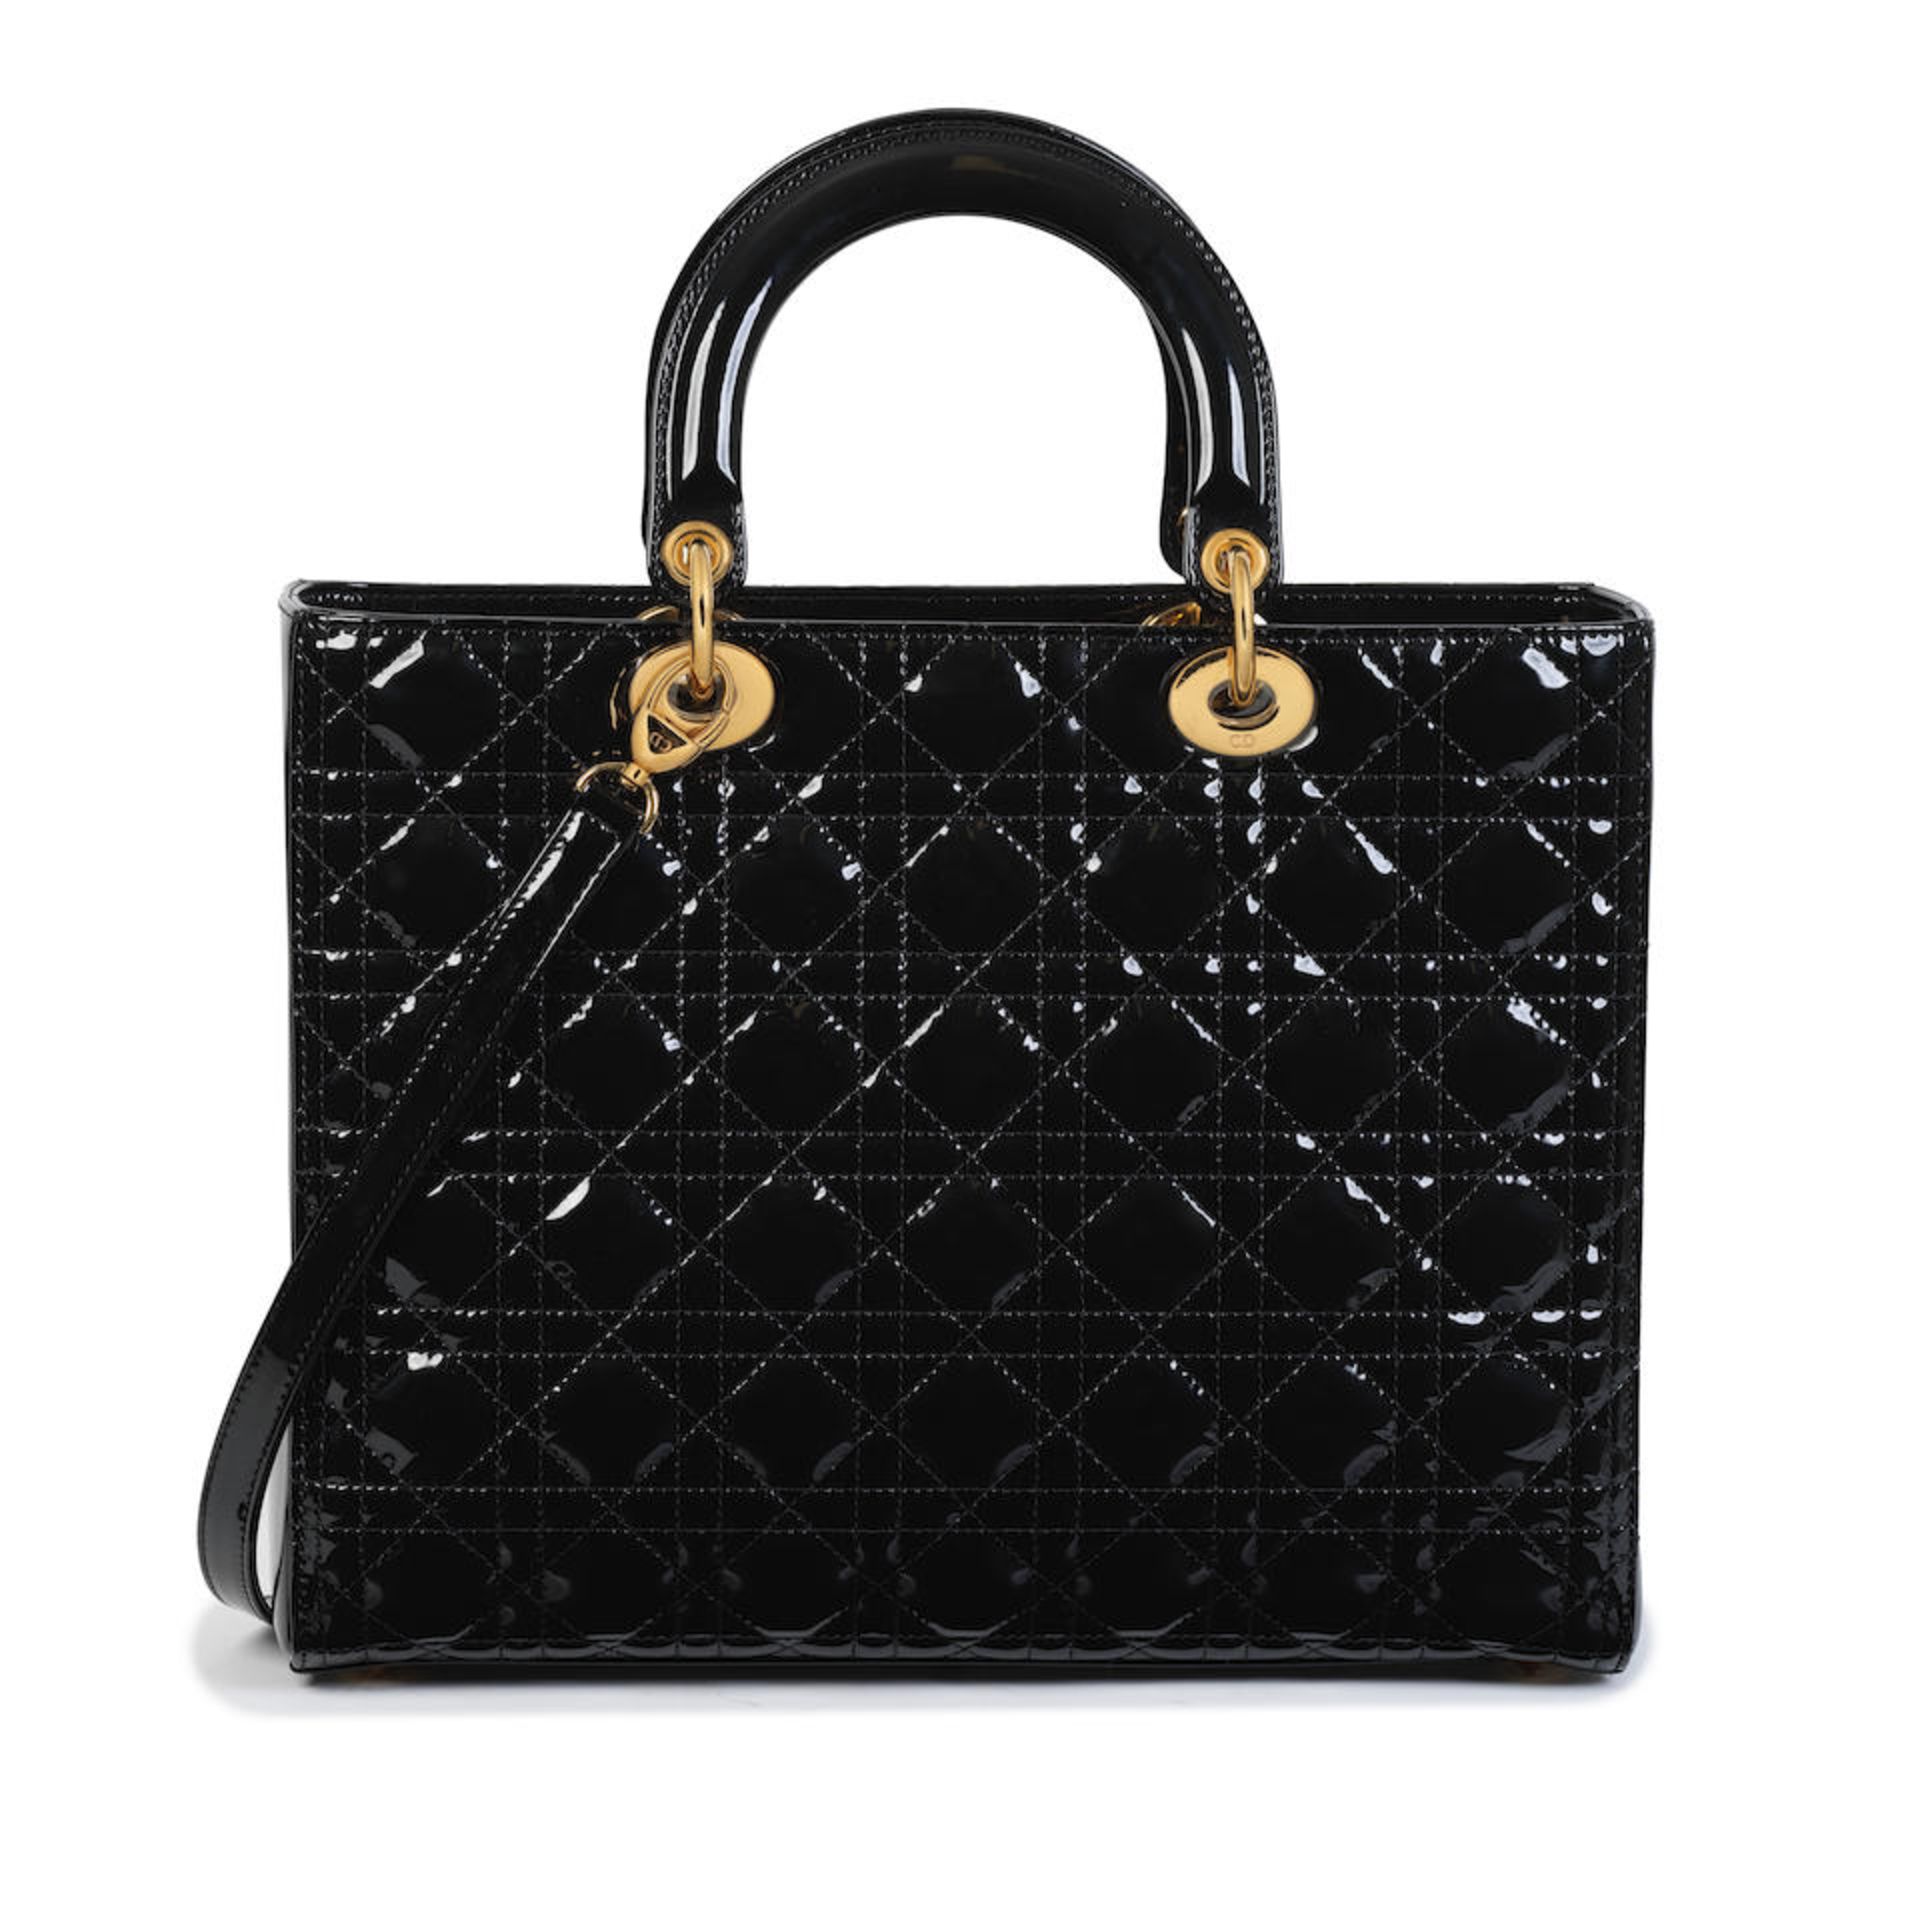 Christian Dior: a Black Patent Leather Large Lady Dior 2011 (includes shoulder strap, authentici... - Bild 2 aus 3